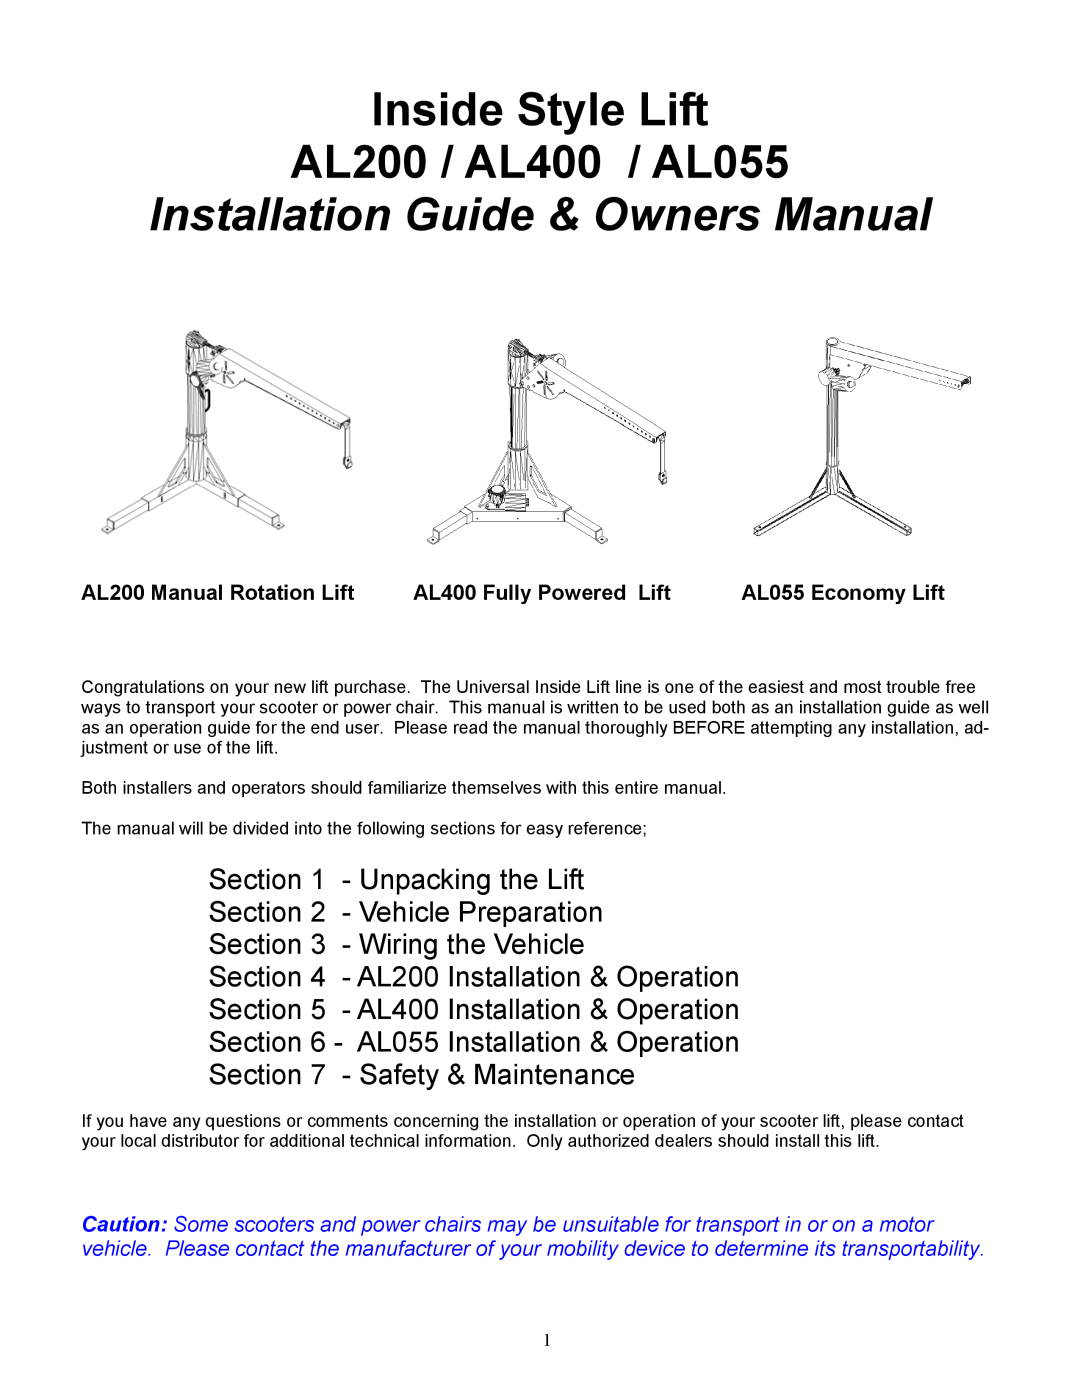 Harmar Mobility manual AL200 Manual Rotation Lift, AL400 Fully Powered Lift, AL055 Economy Lift, Wiring the Vehicle 